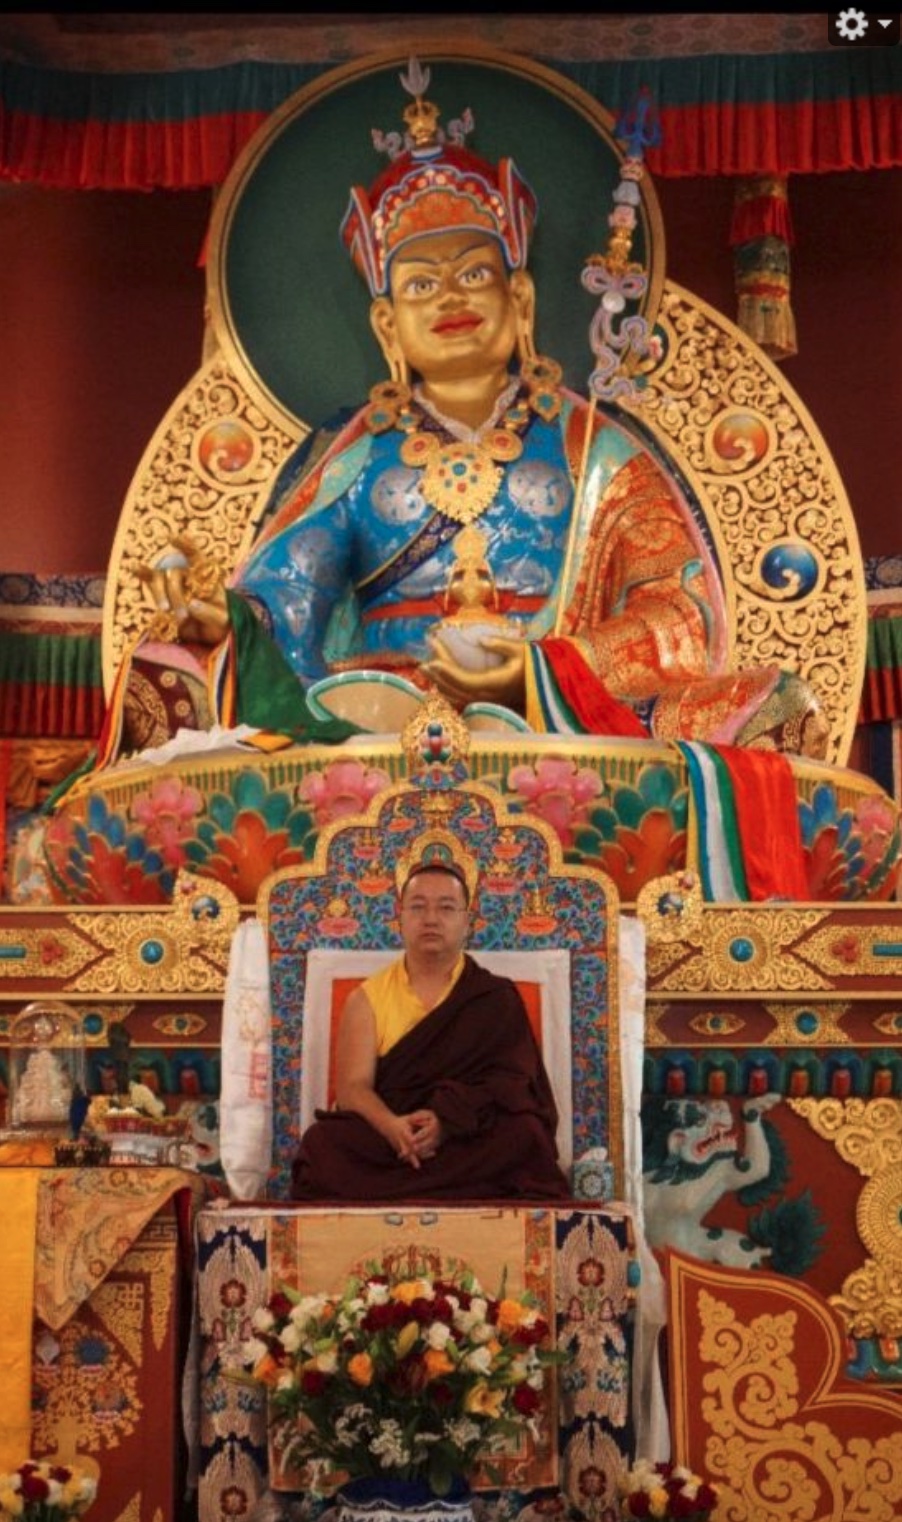 Dudjom Rinpoche III Sangye Pema Shepa POL throne